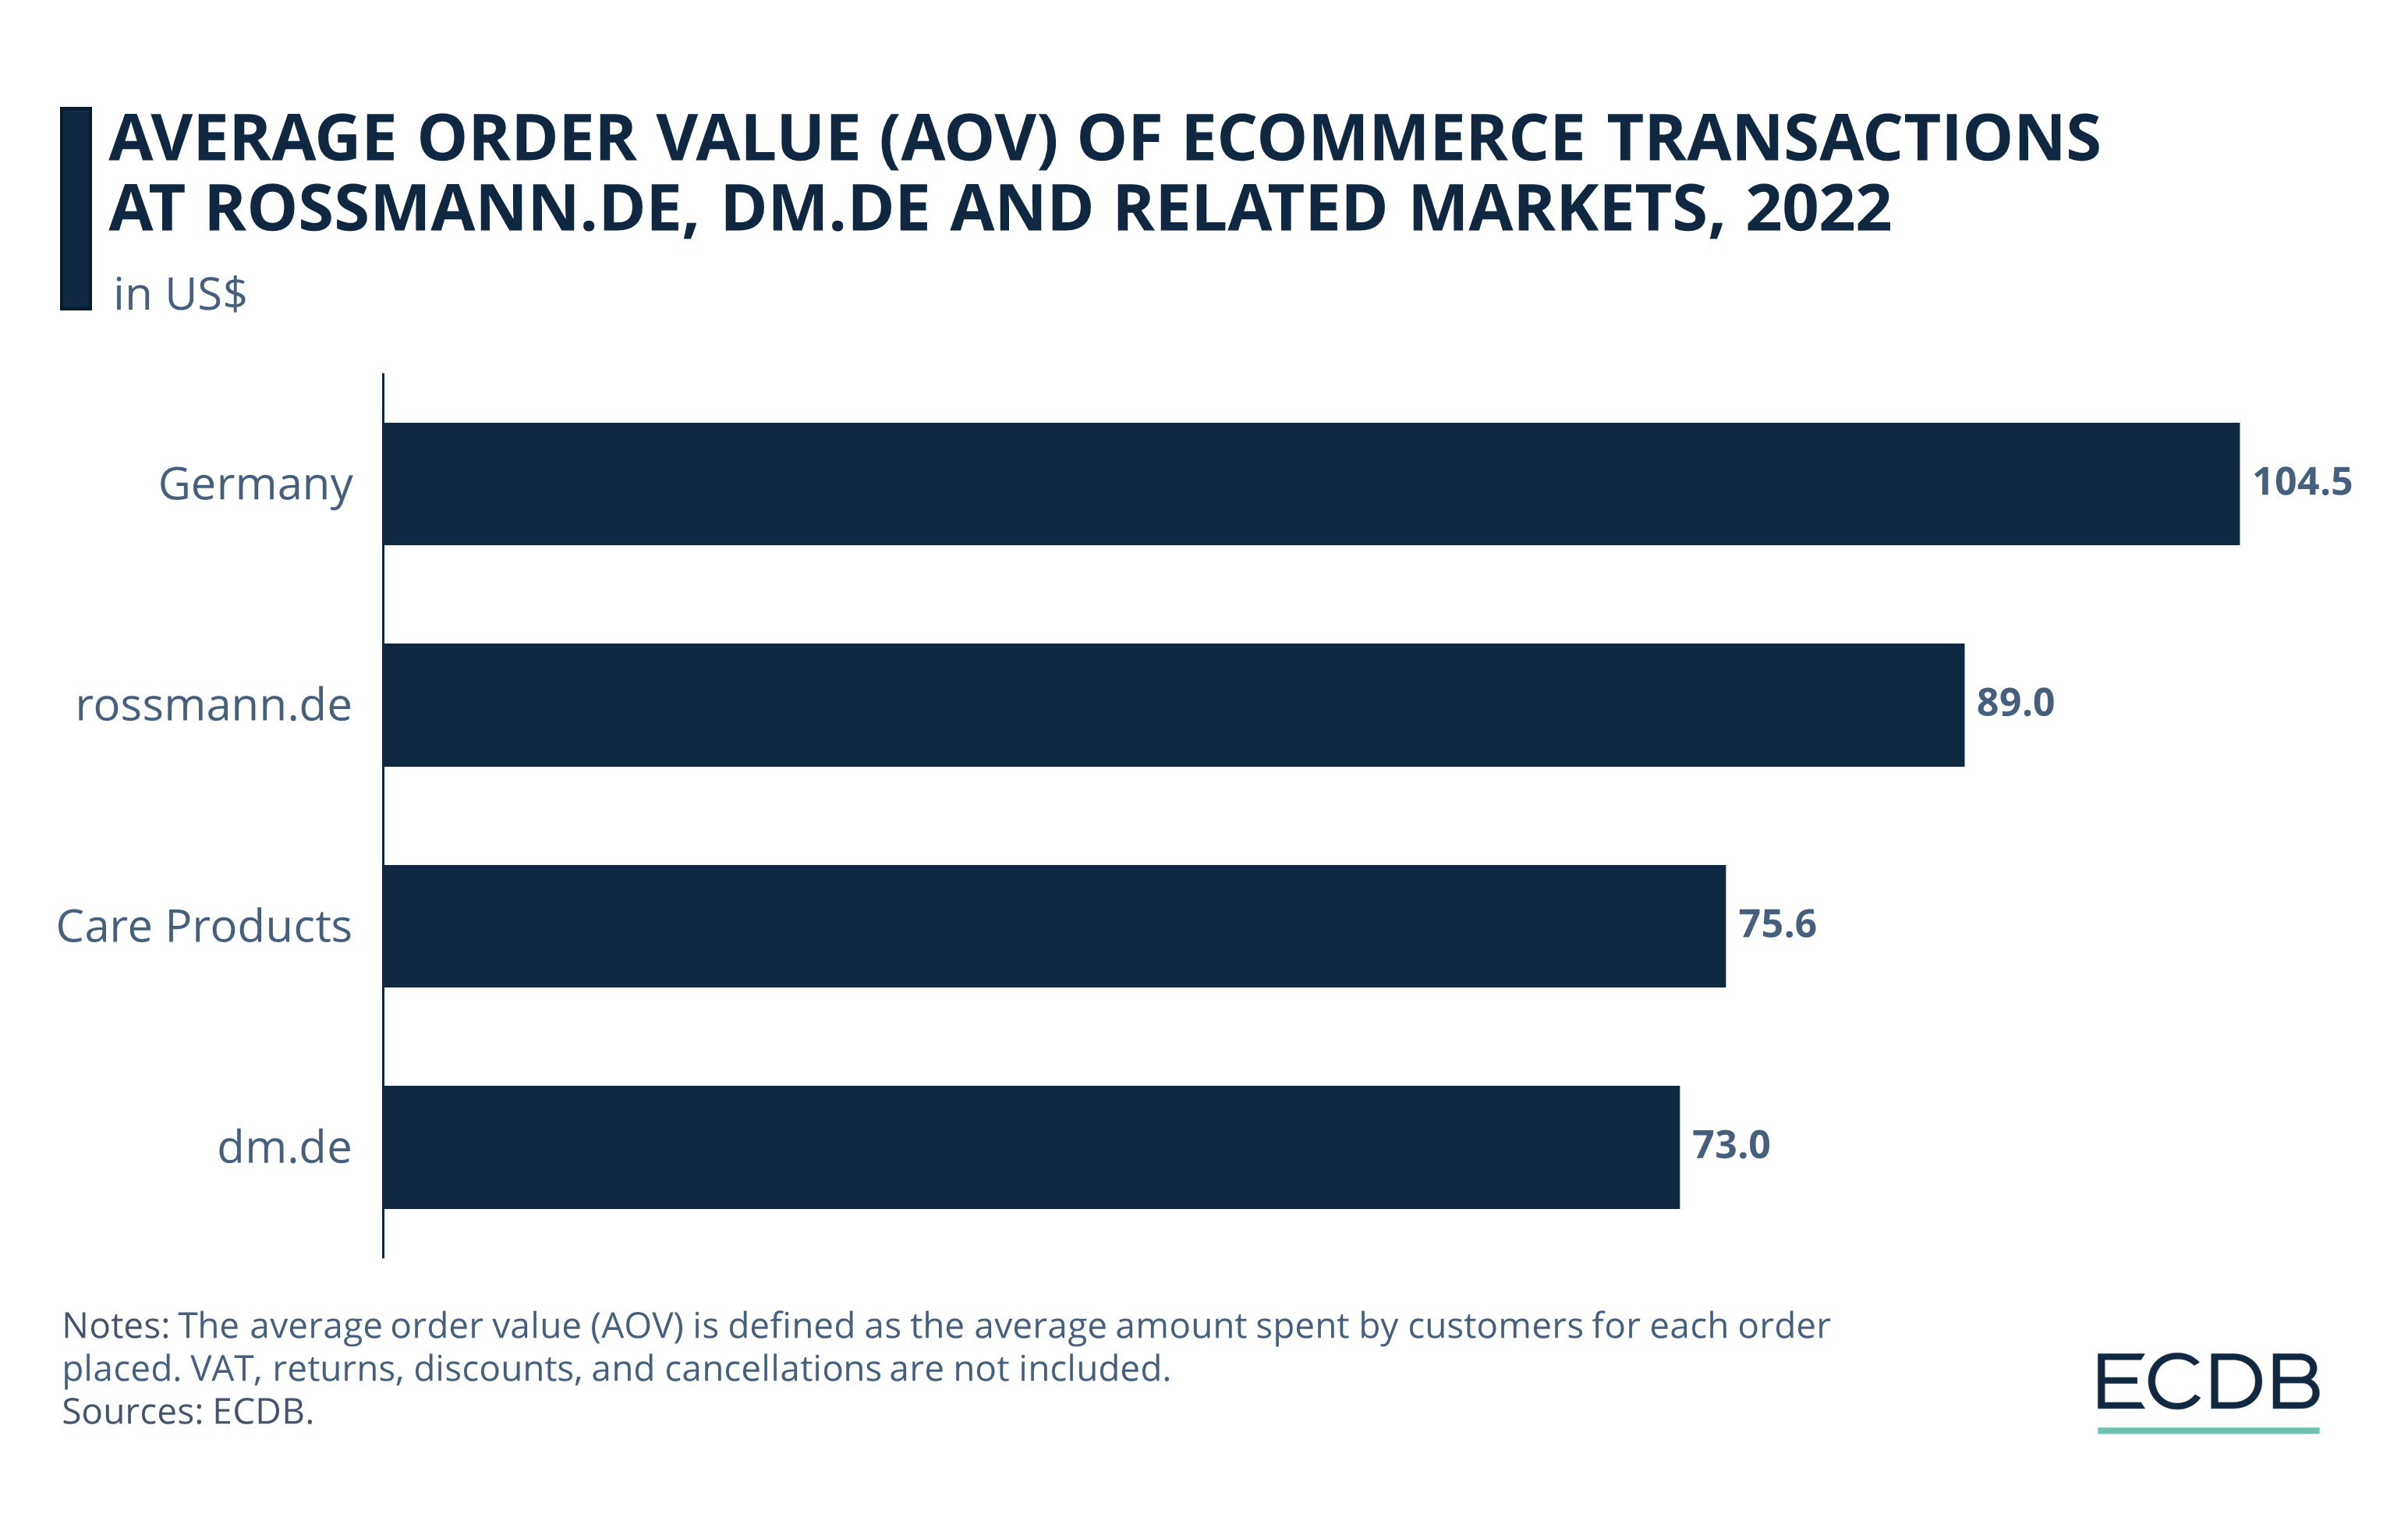 Average Order Value (AOV) of eCommerce Transactions, 2022